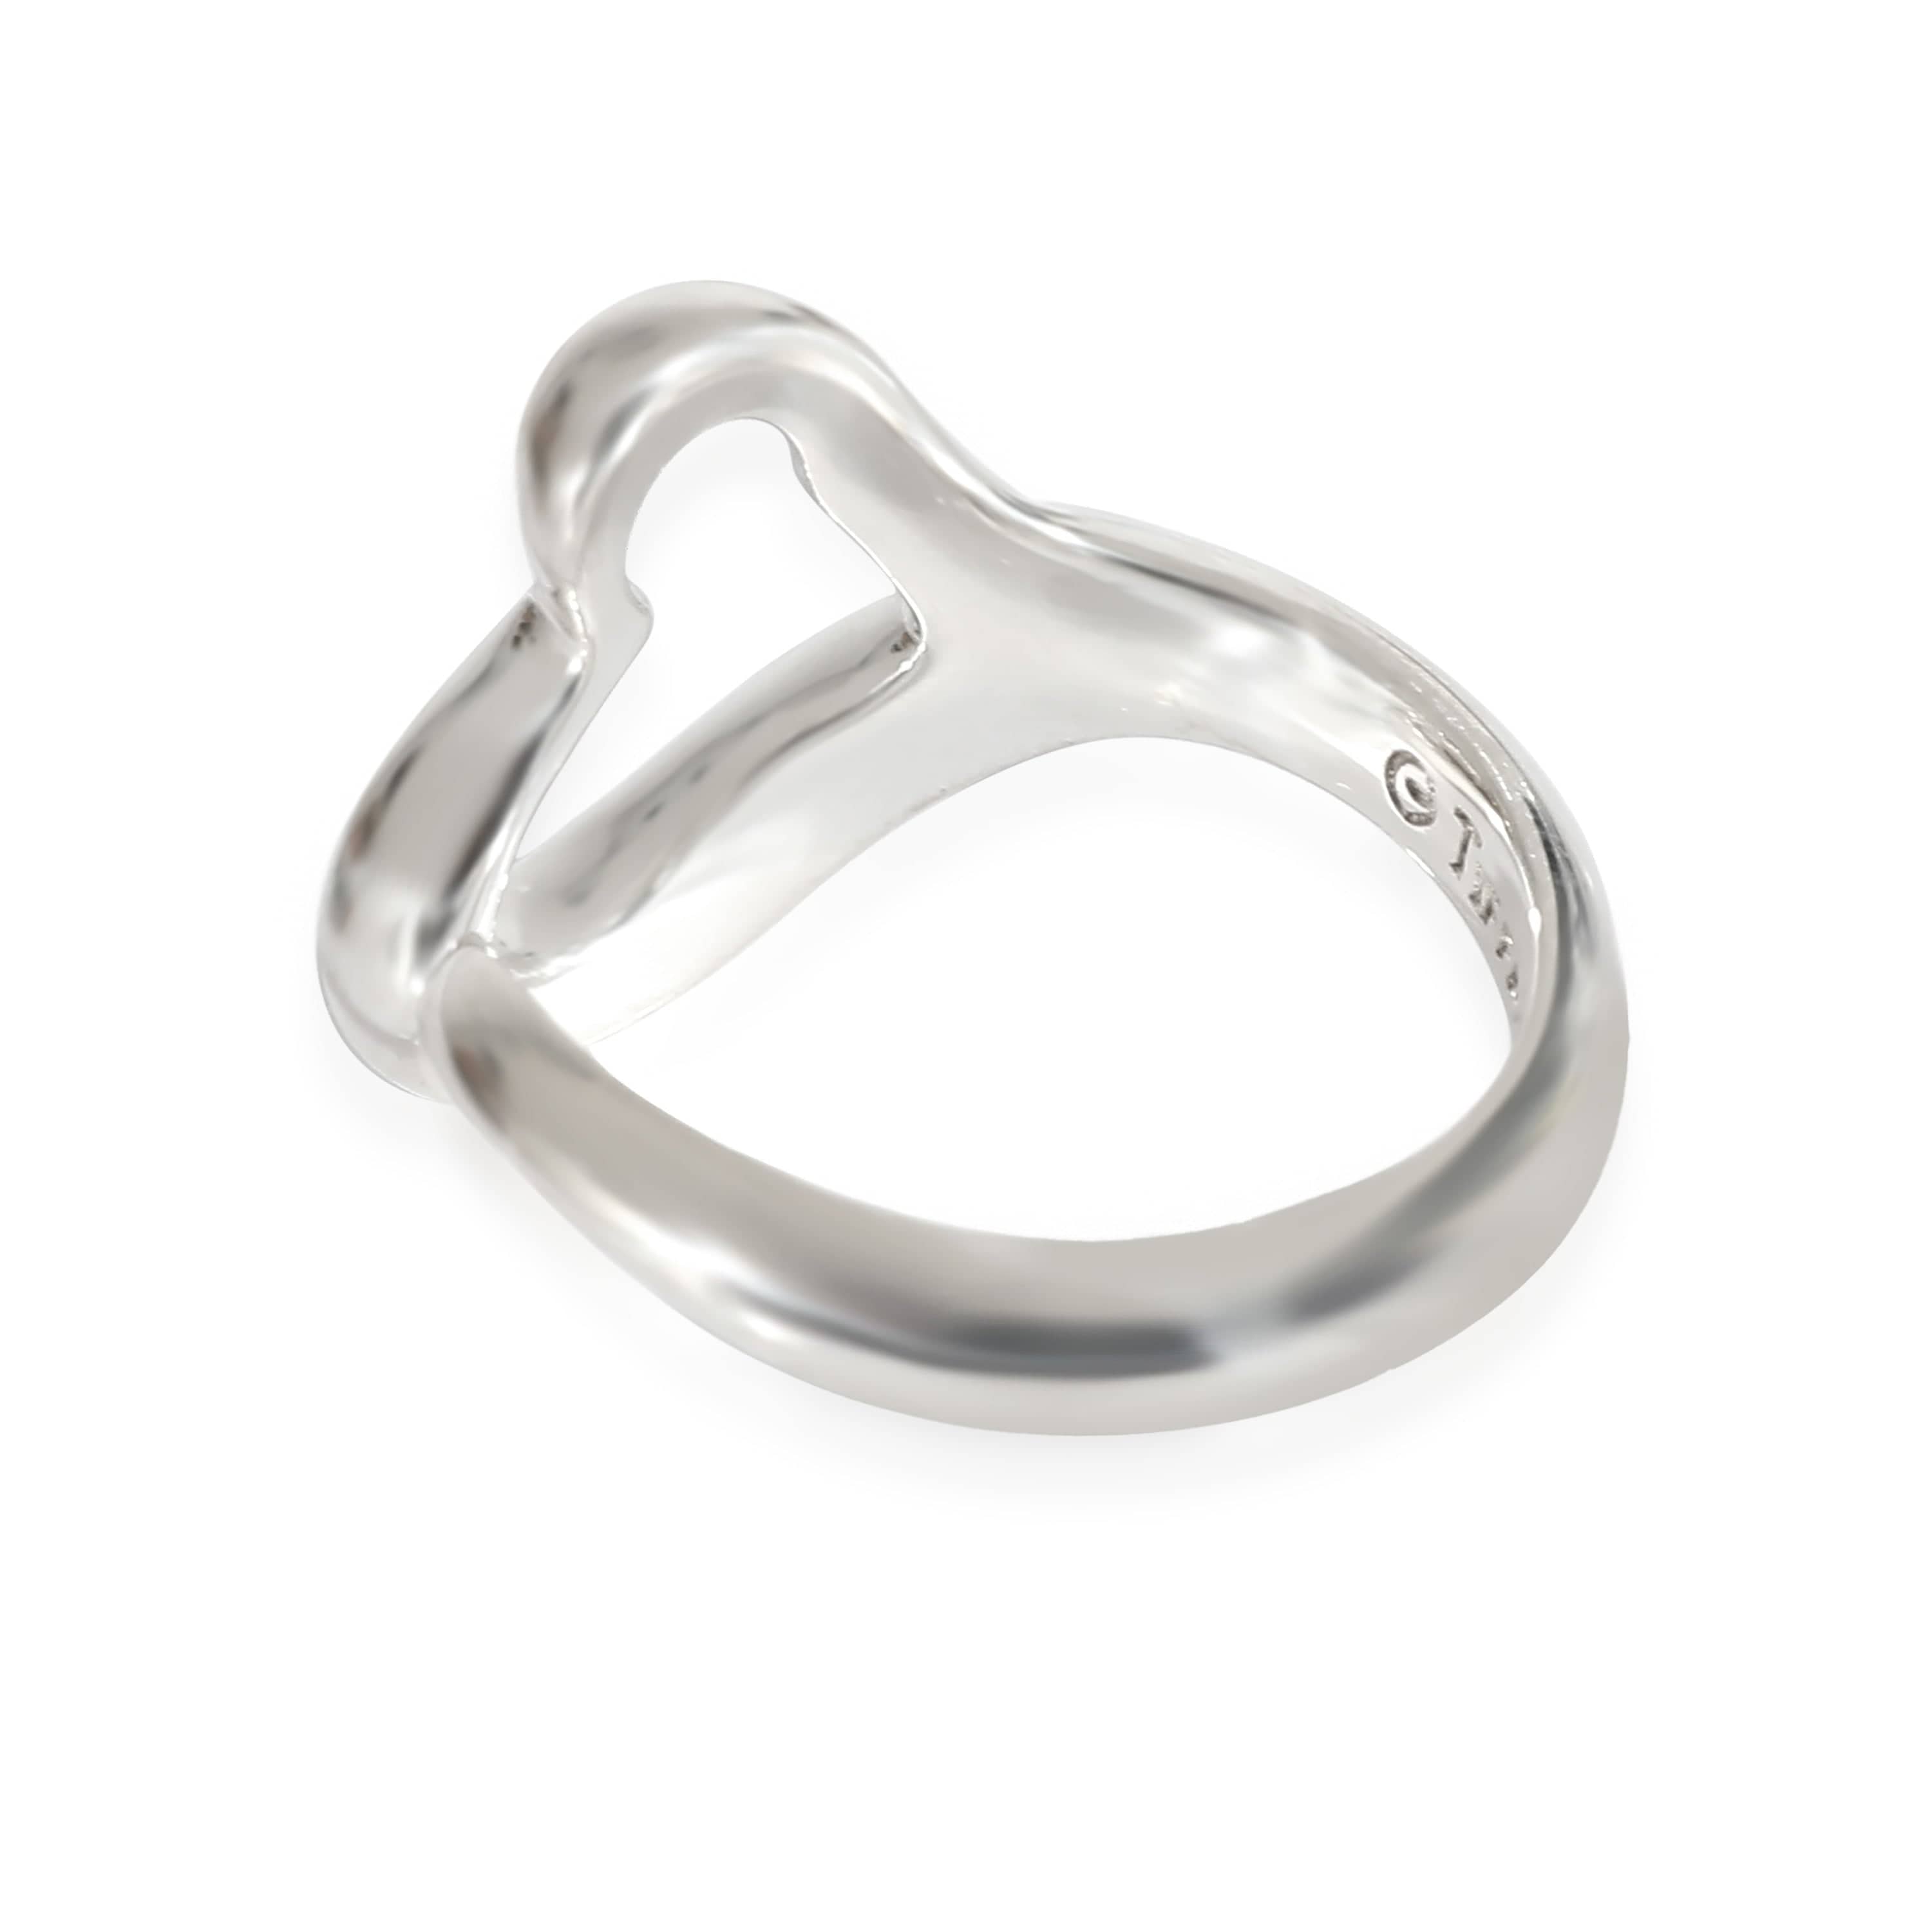 Tiffany & Co. Tiffany & Co. Elsa Peretti Open Heart Ring in Sterling Silver